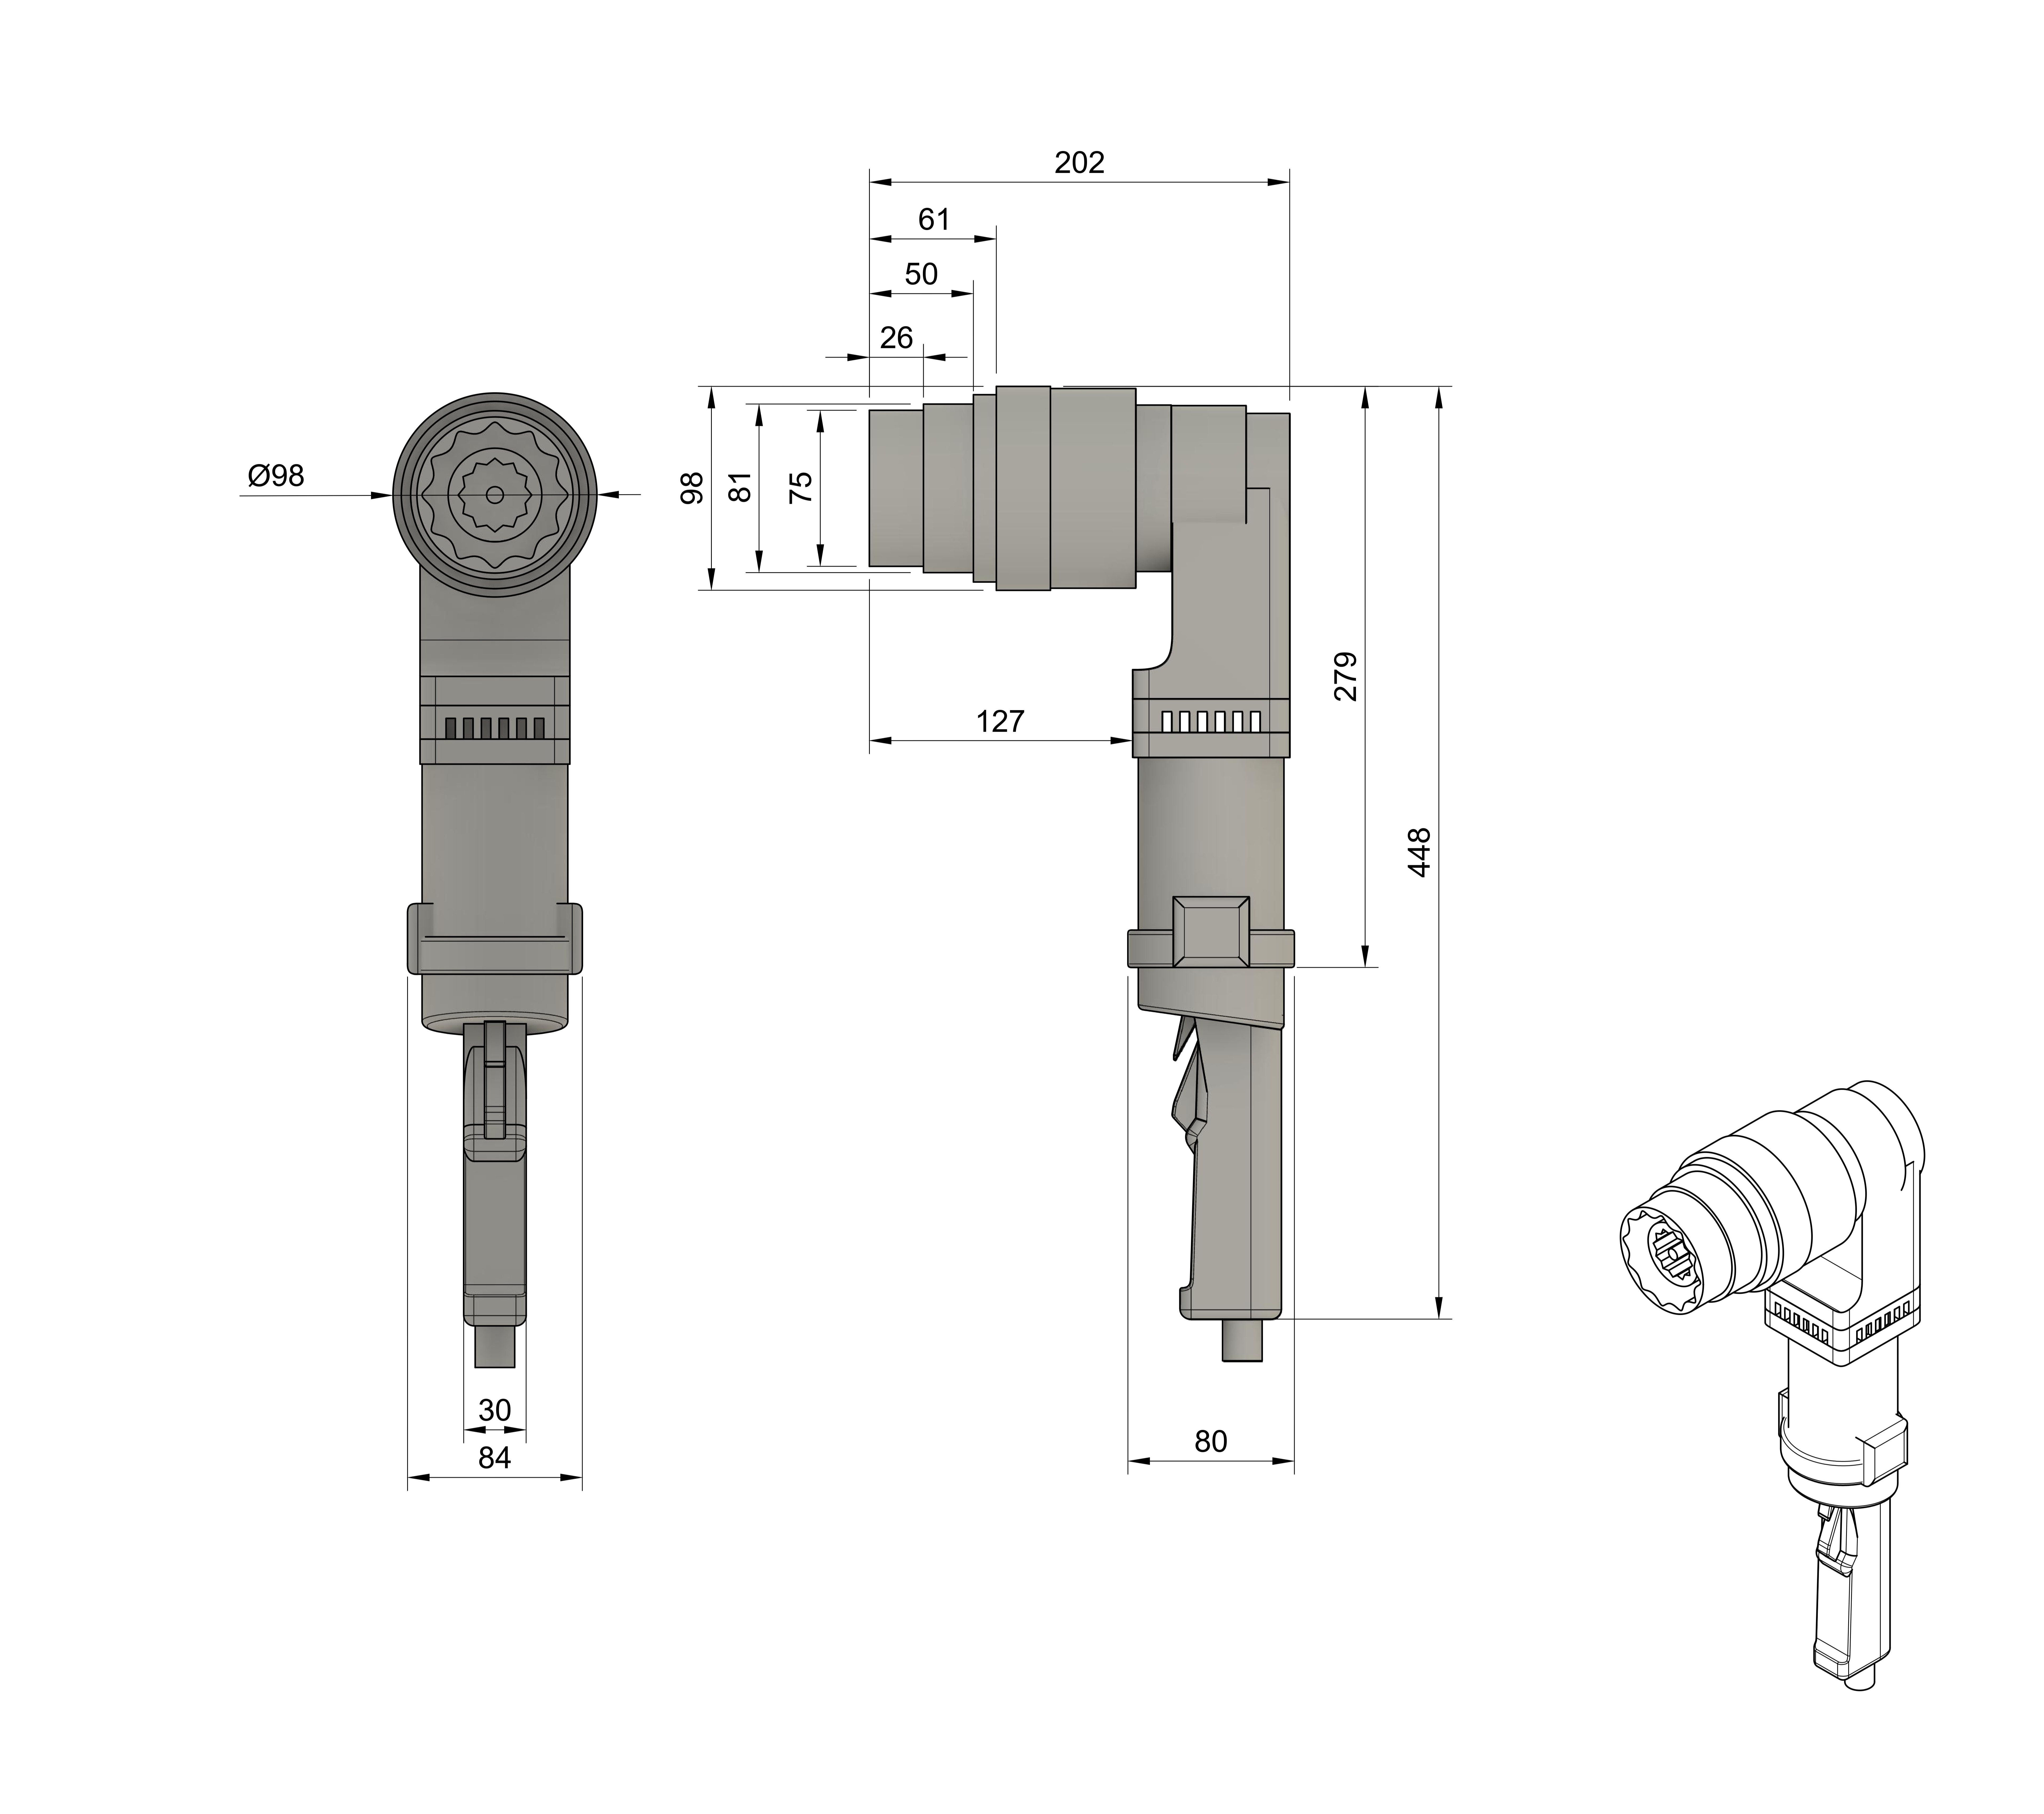 GVC300 Shear Wrench Drawing